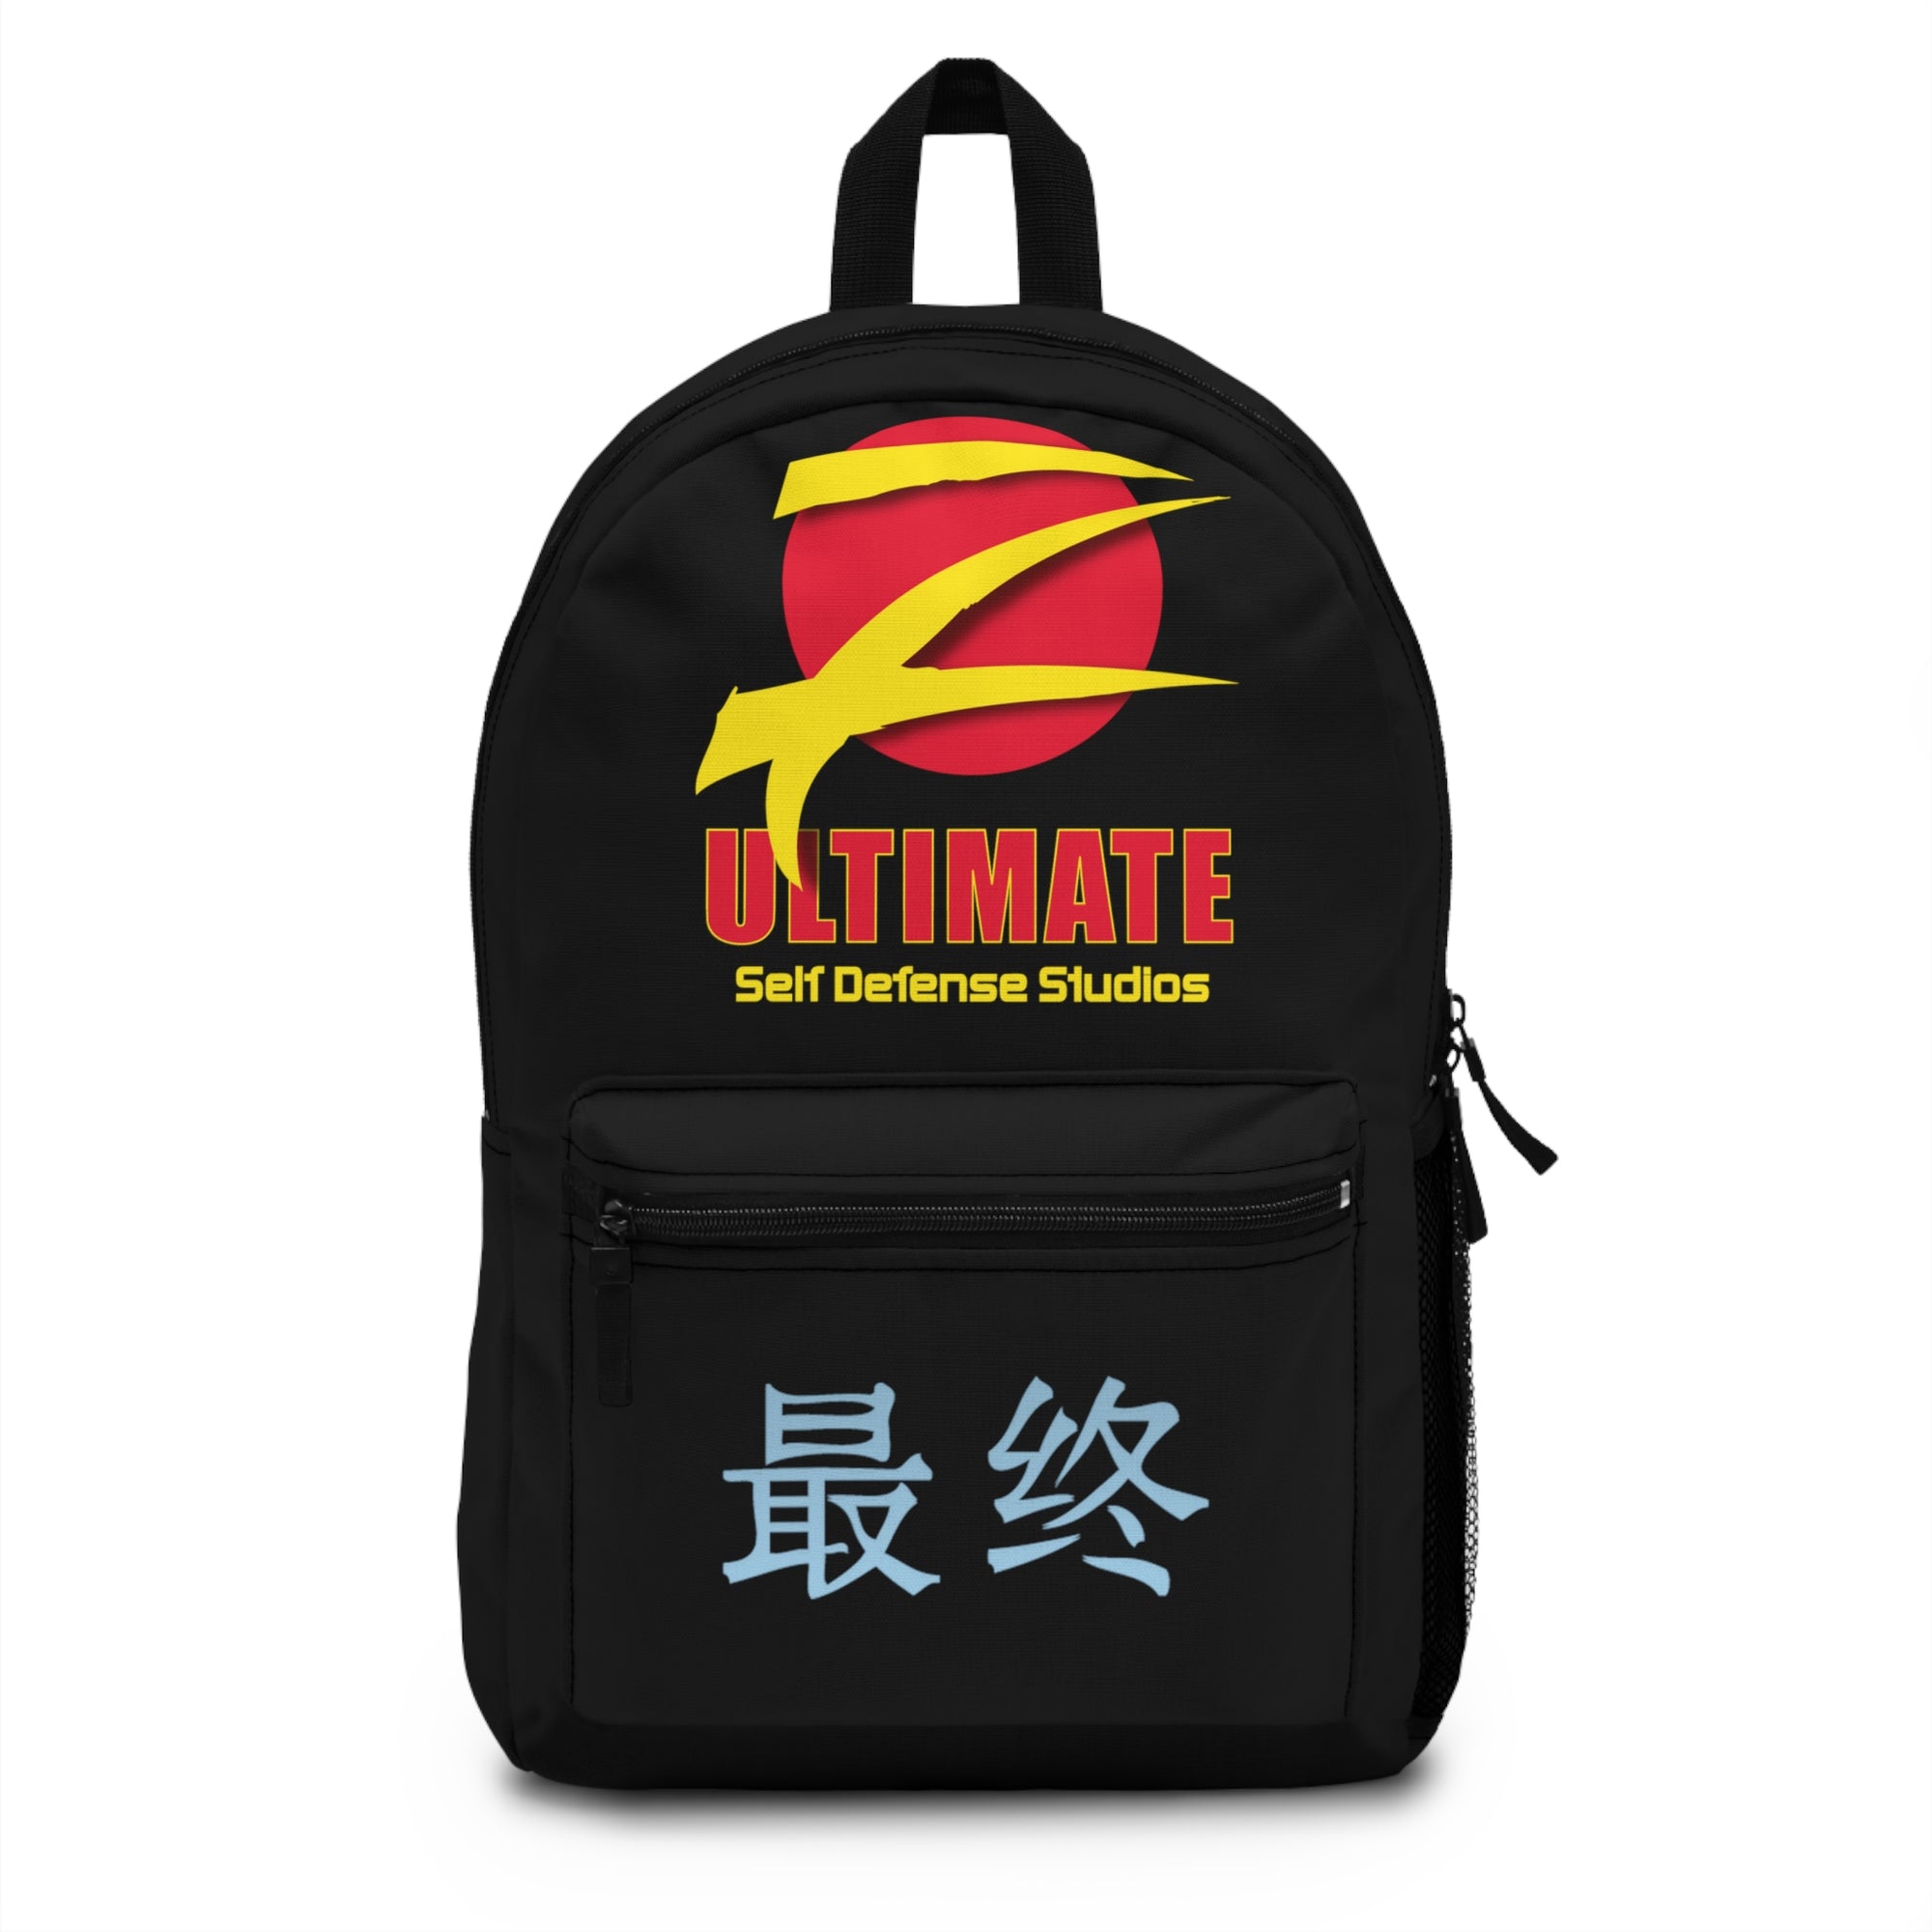 Z-Ultimate Backpack II